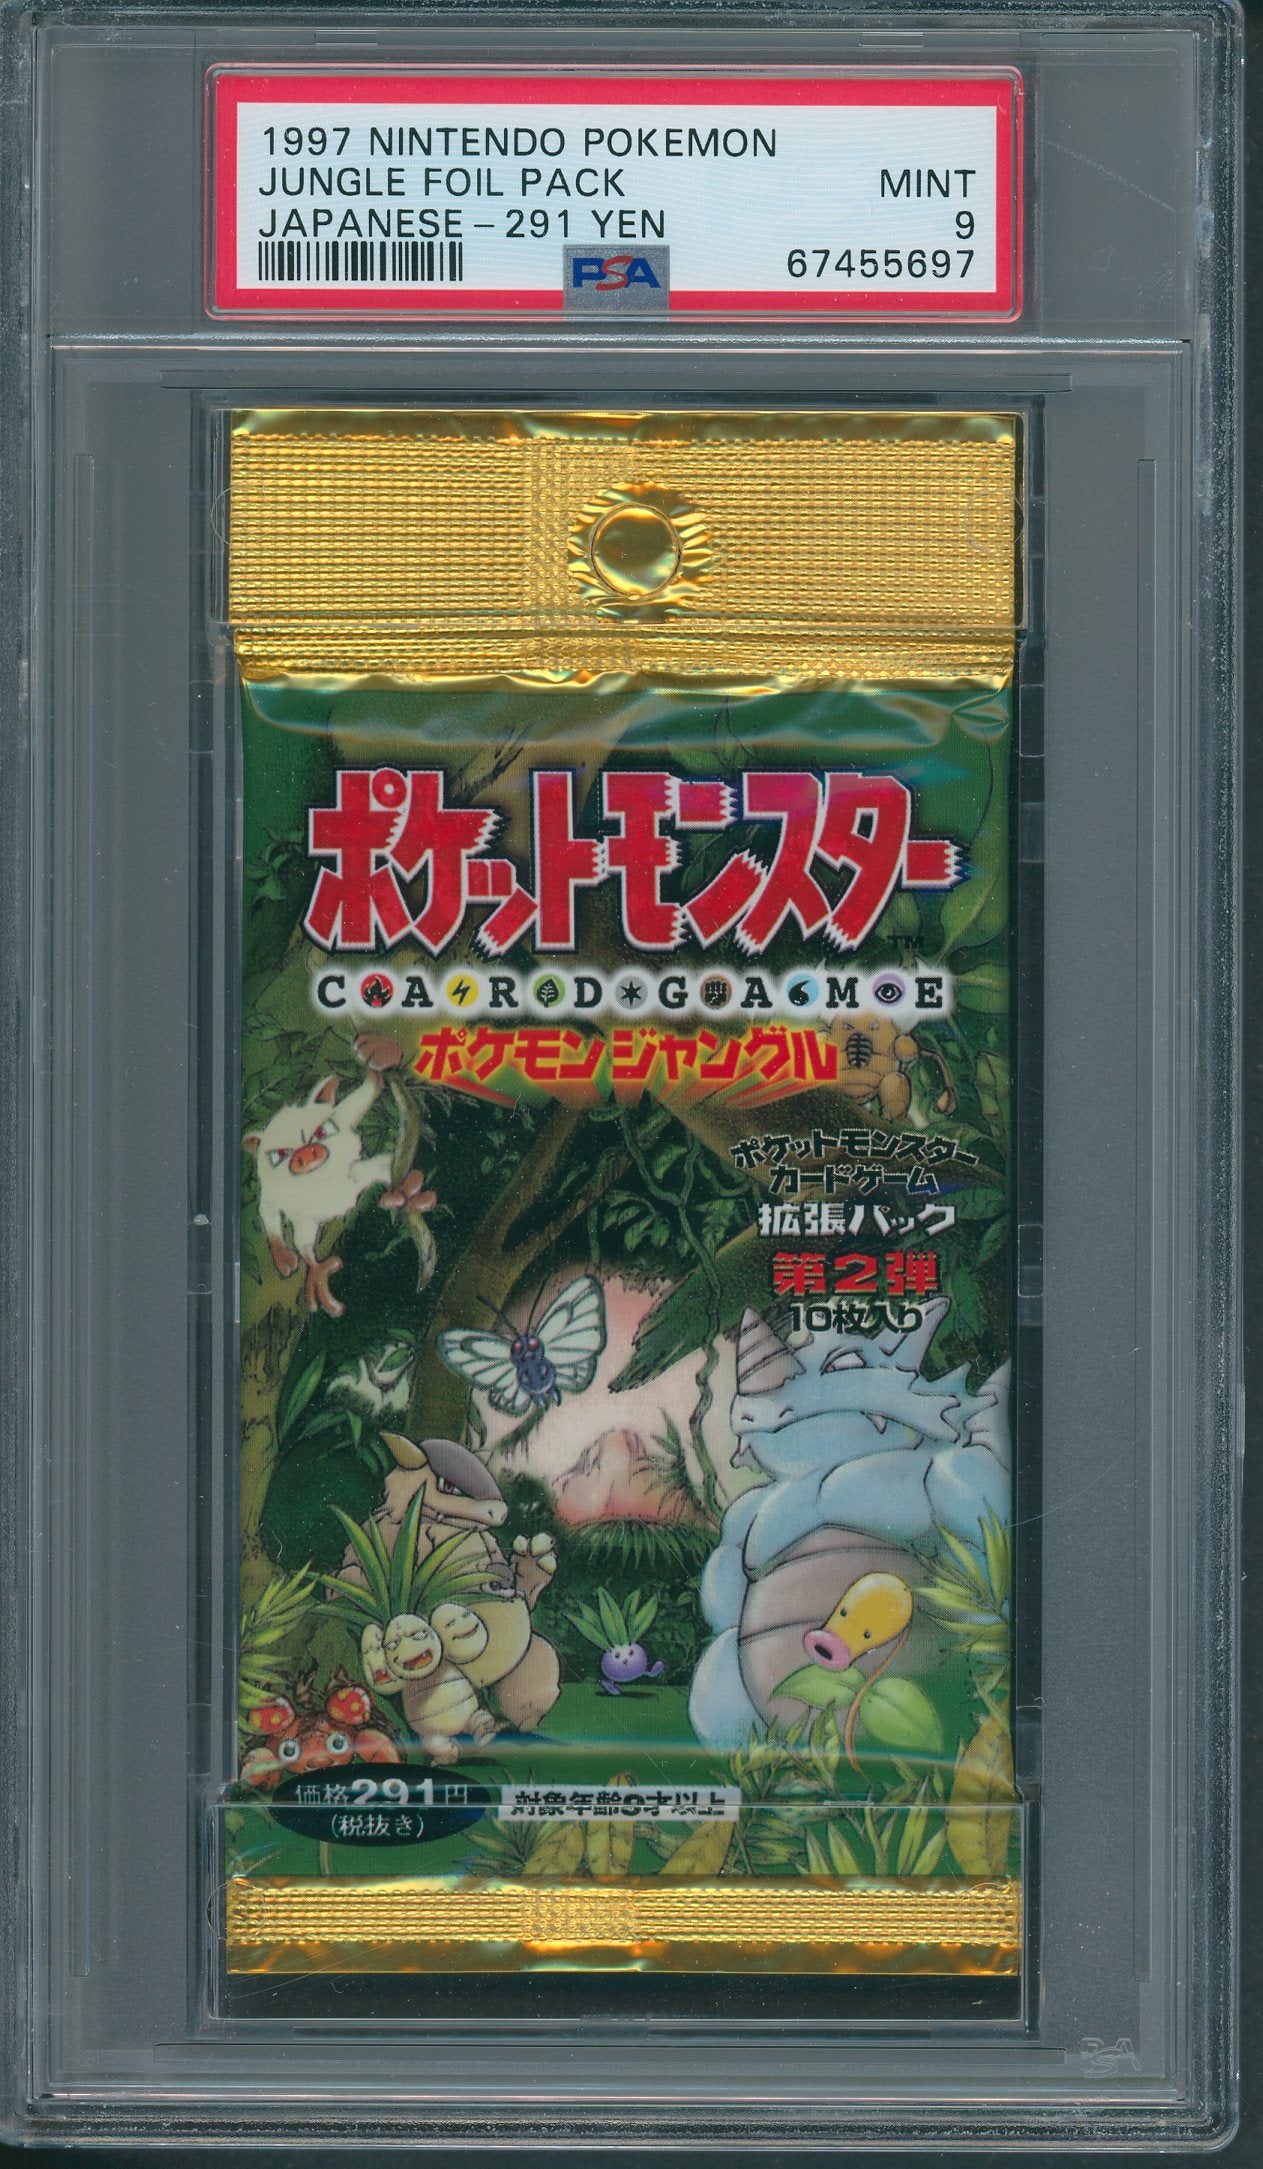 1997 Nintendo Pokemon Jungle Unopened Pack Japanese 291 Yen PSA 9 *5697